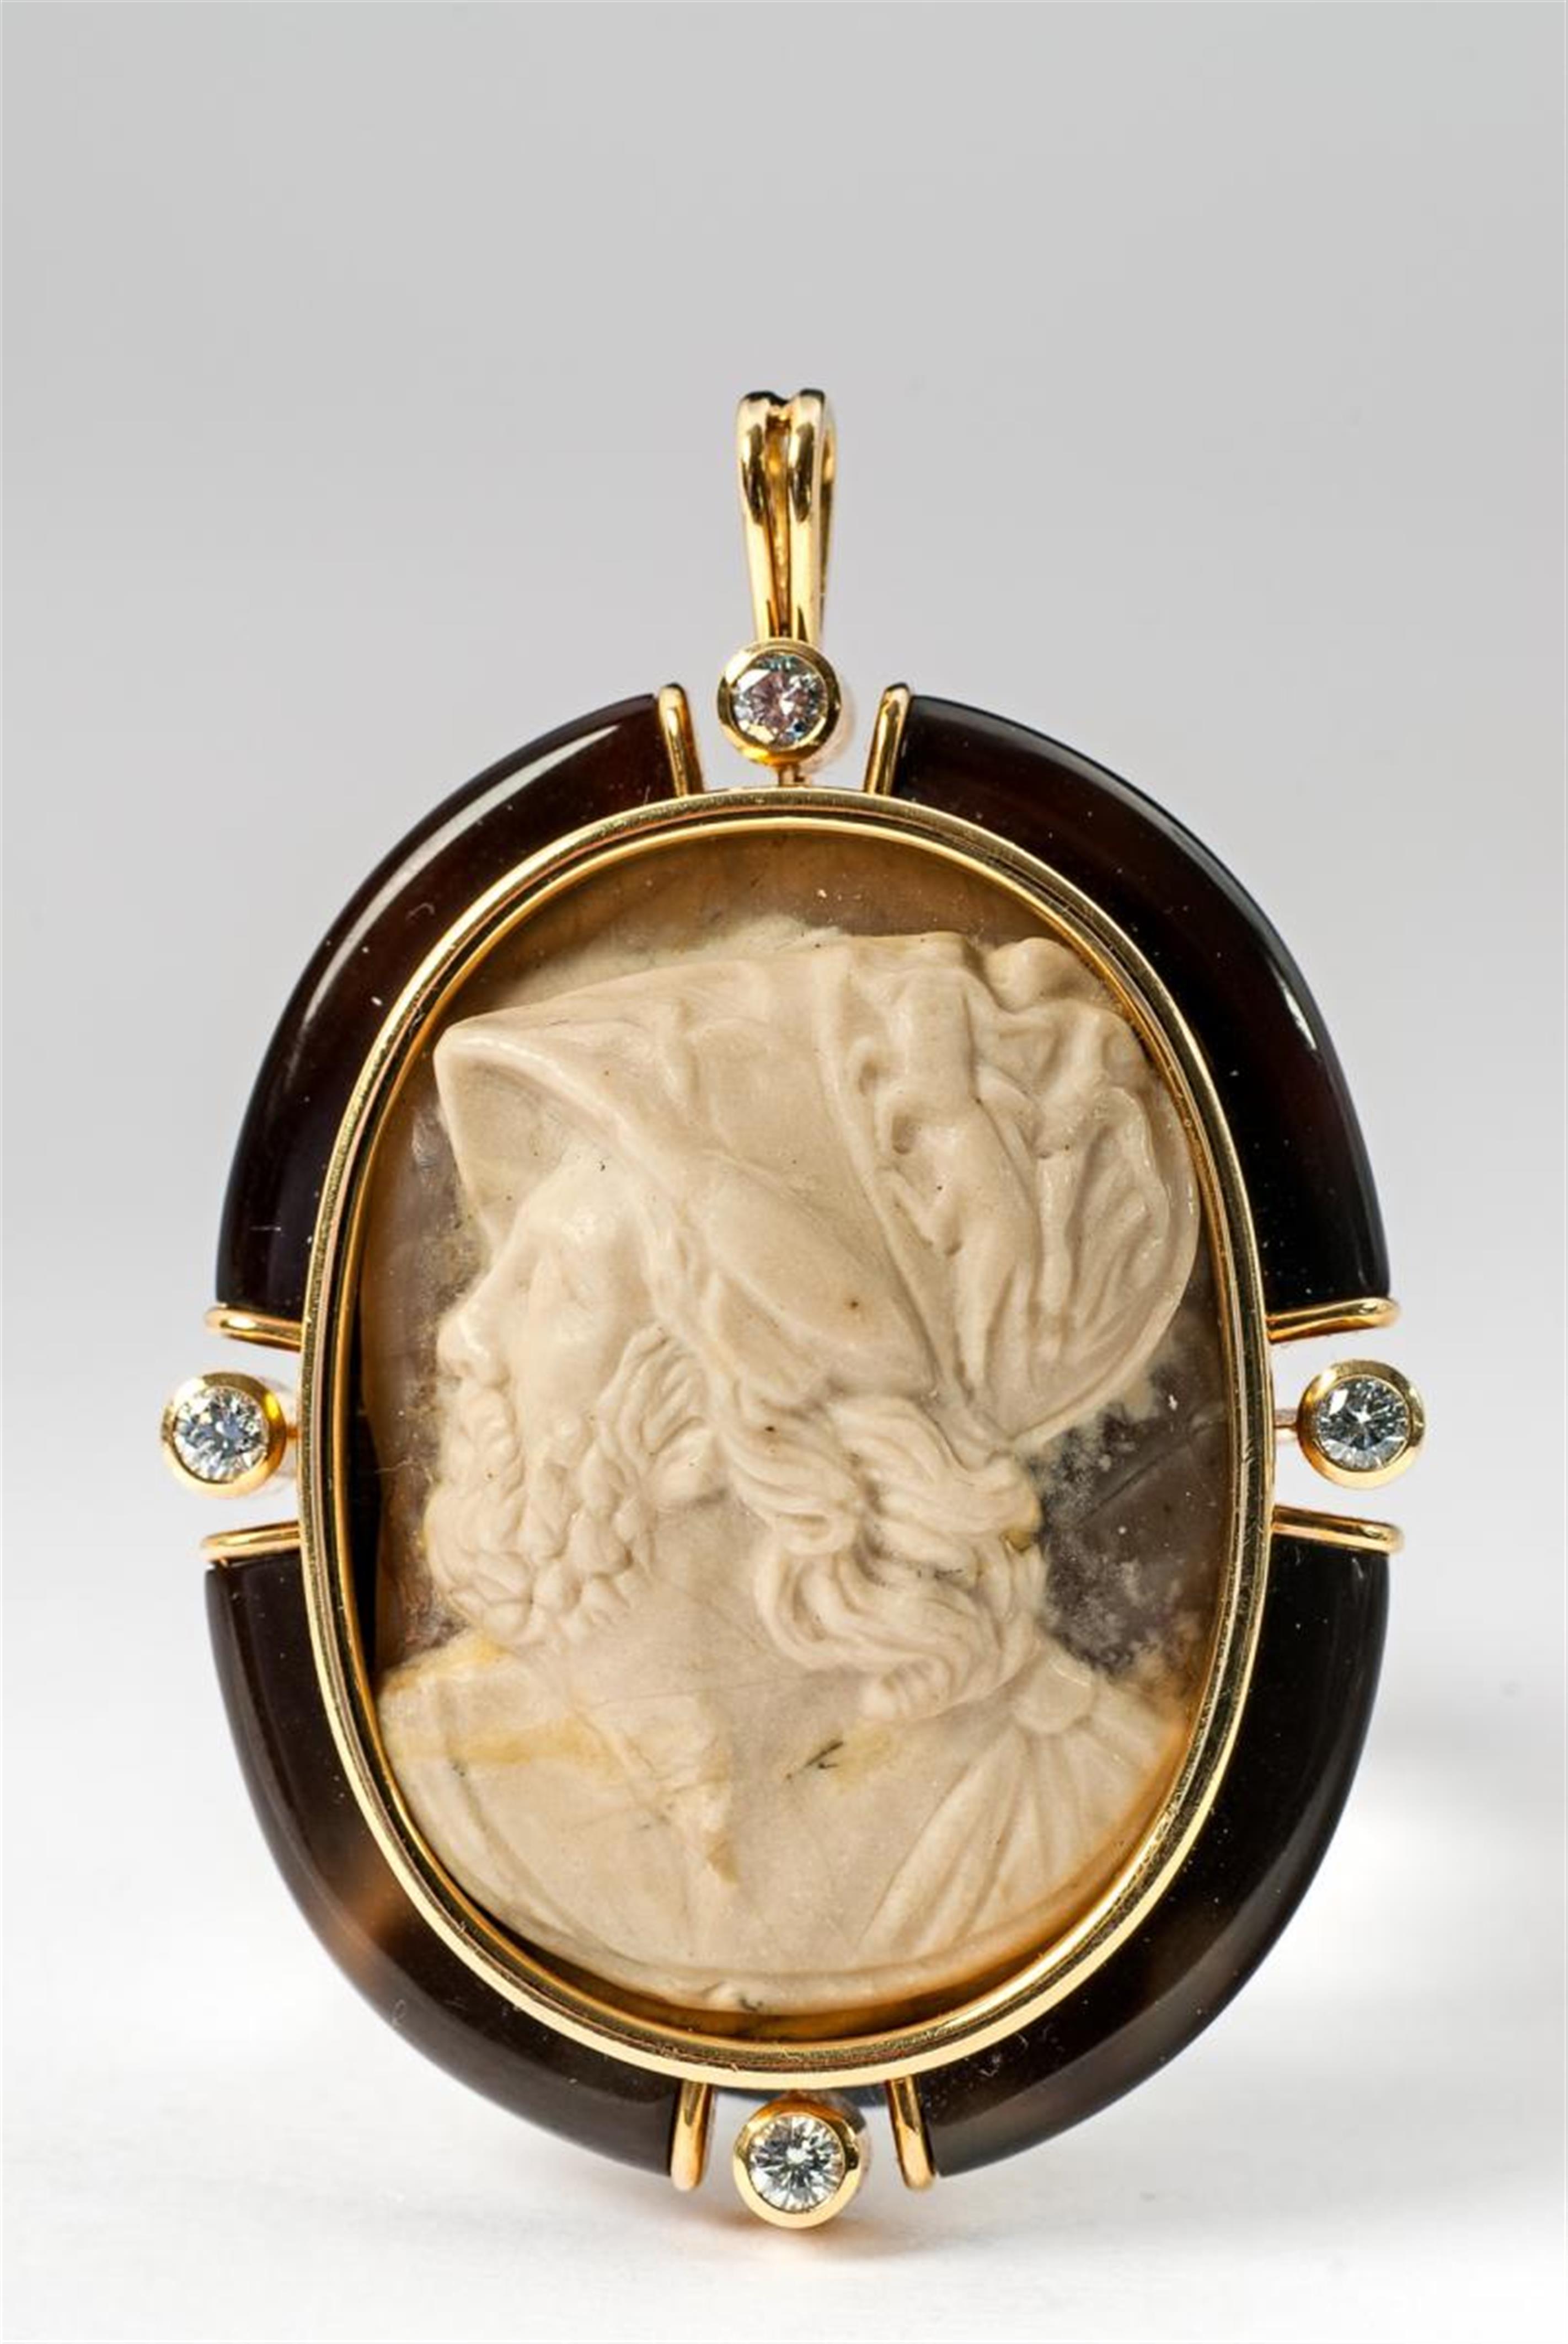 An 18k gold and enamel pendant with a historical sardonyx cameo - image-1